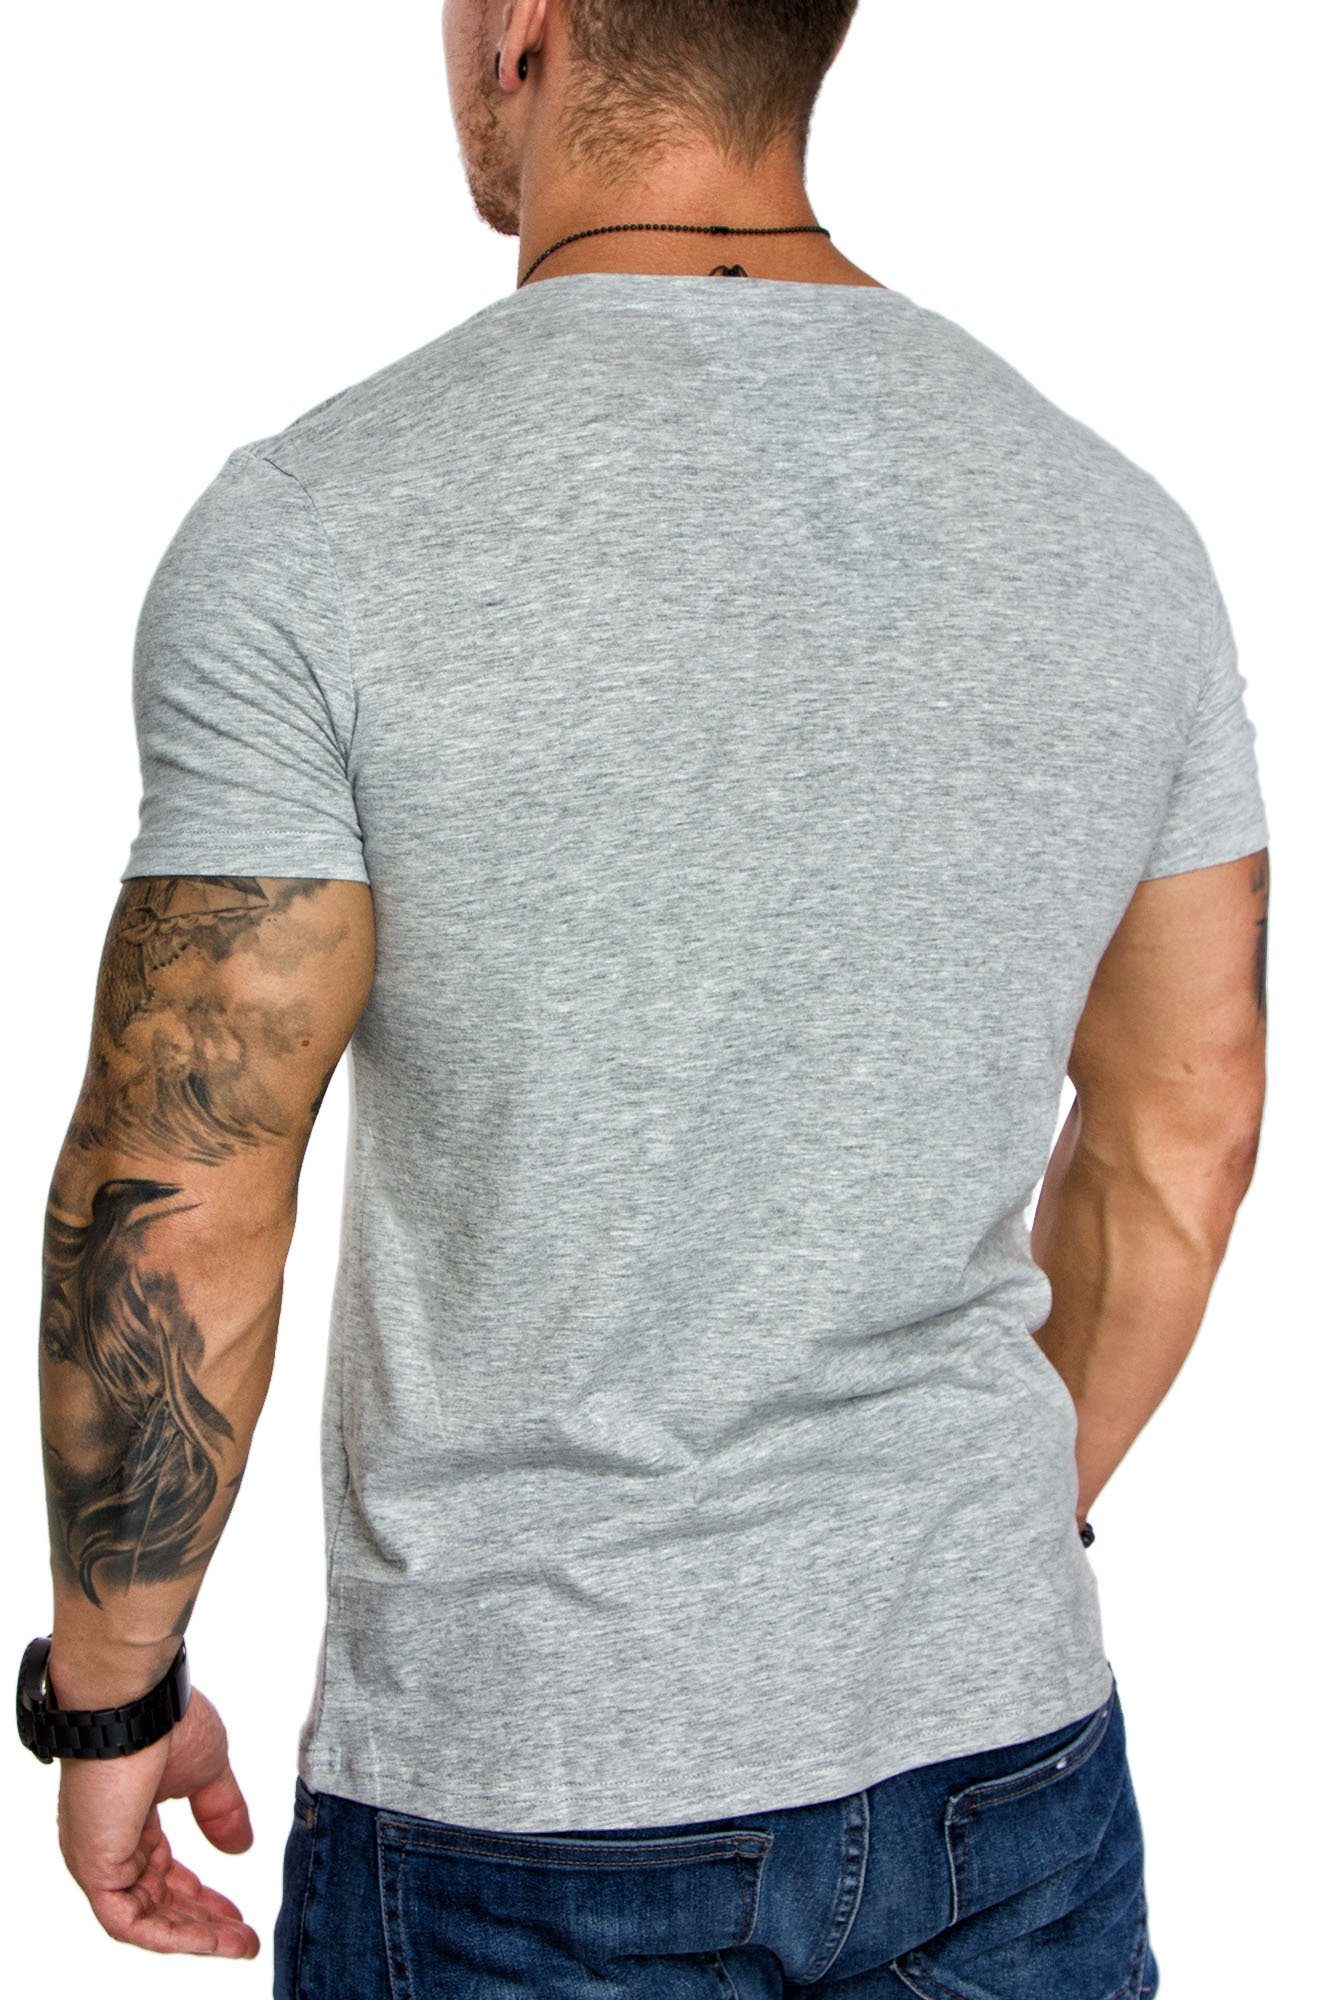 Amaci&Sons Grau T-Shirt Einfarbig T-Shirt Melange V-Ausschnitt mit Shirt V-Ausschnitt V-Neck Vintage Herren EUGENE Basic Basic